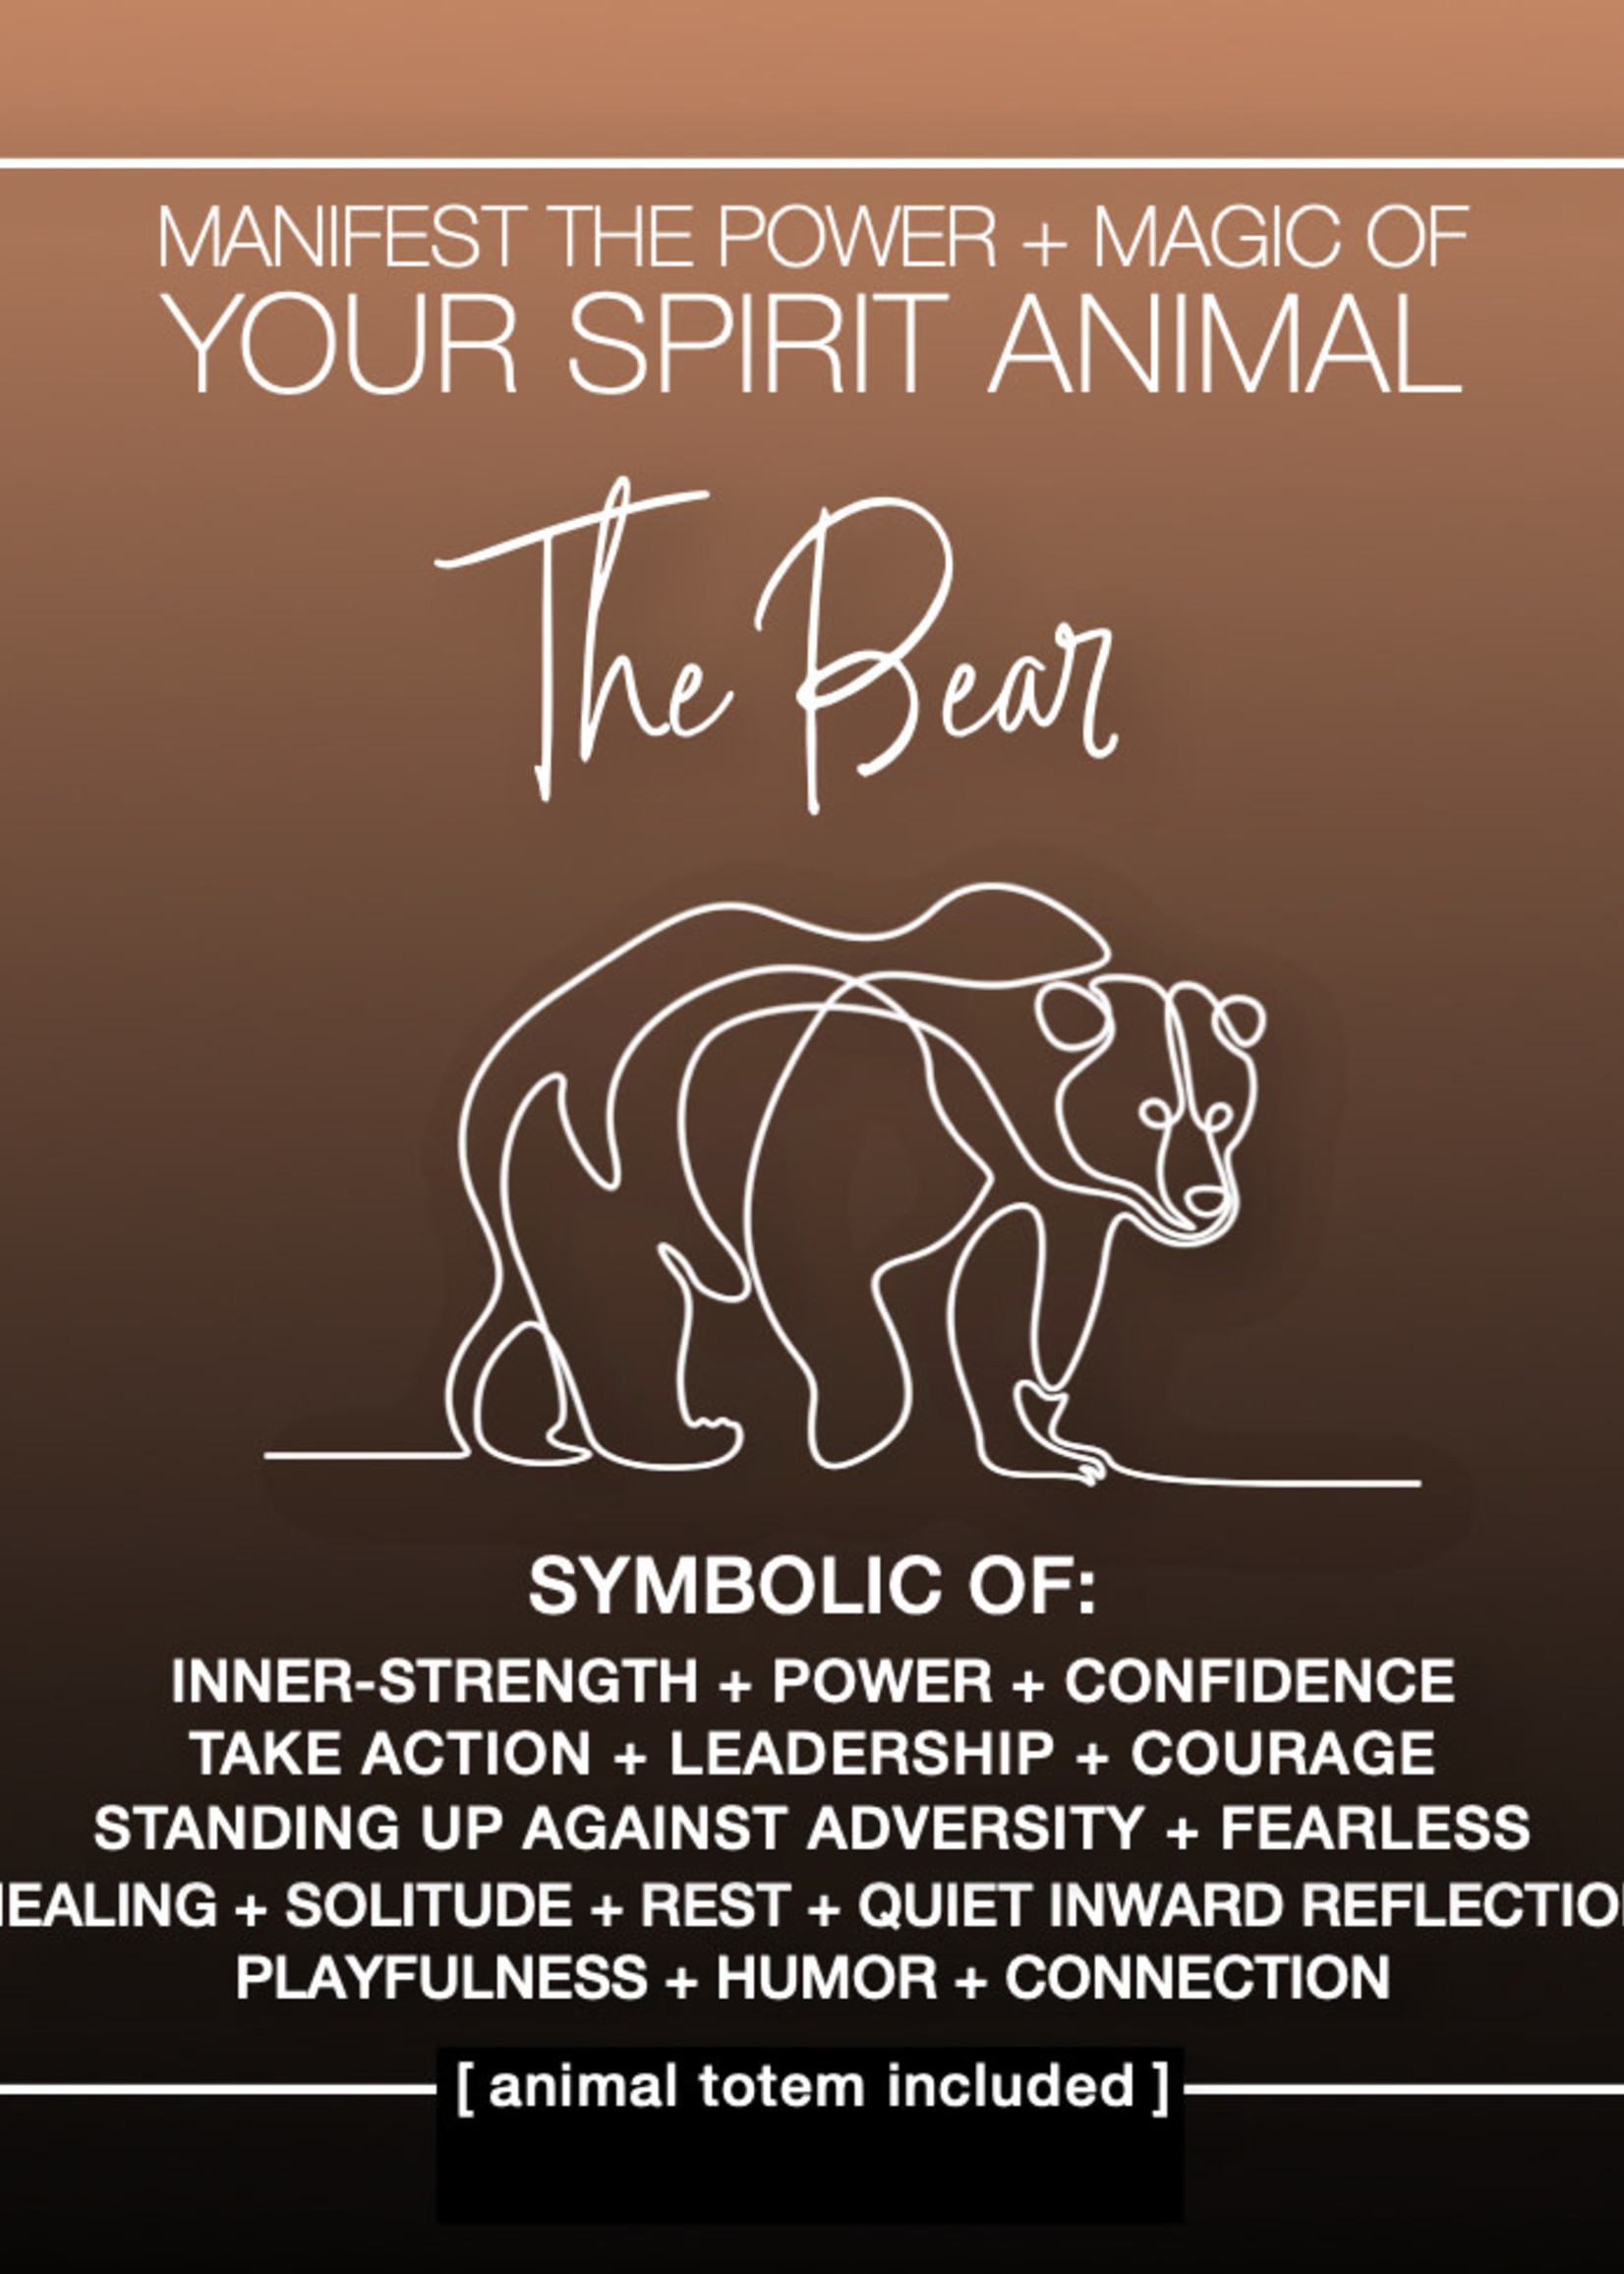 SPIRIT ANIMAL CARD: BEAR